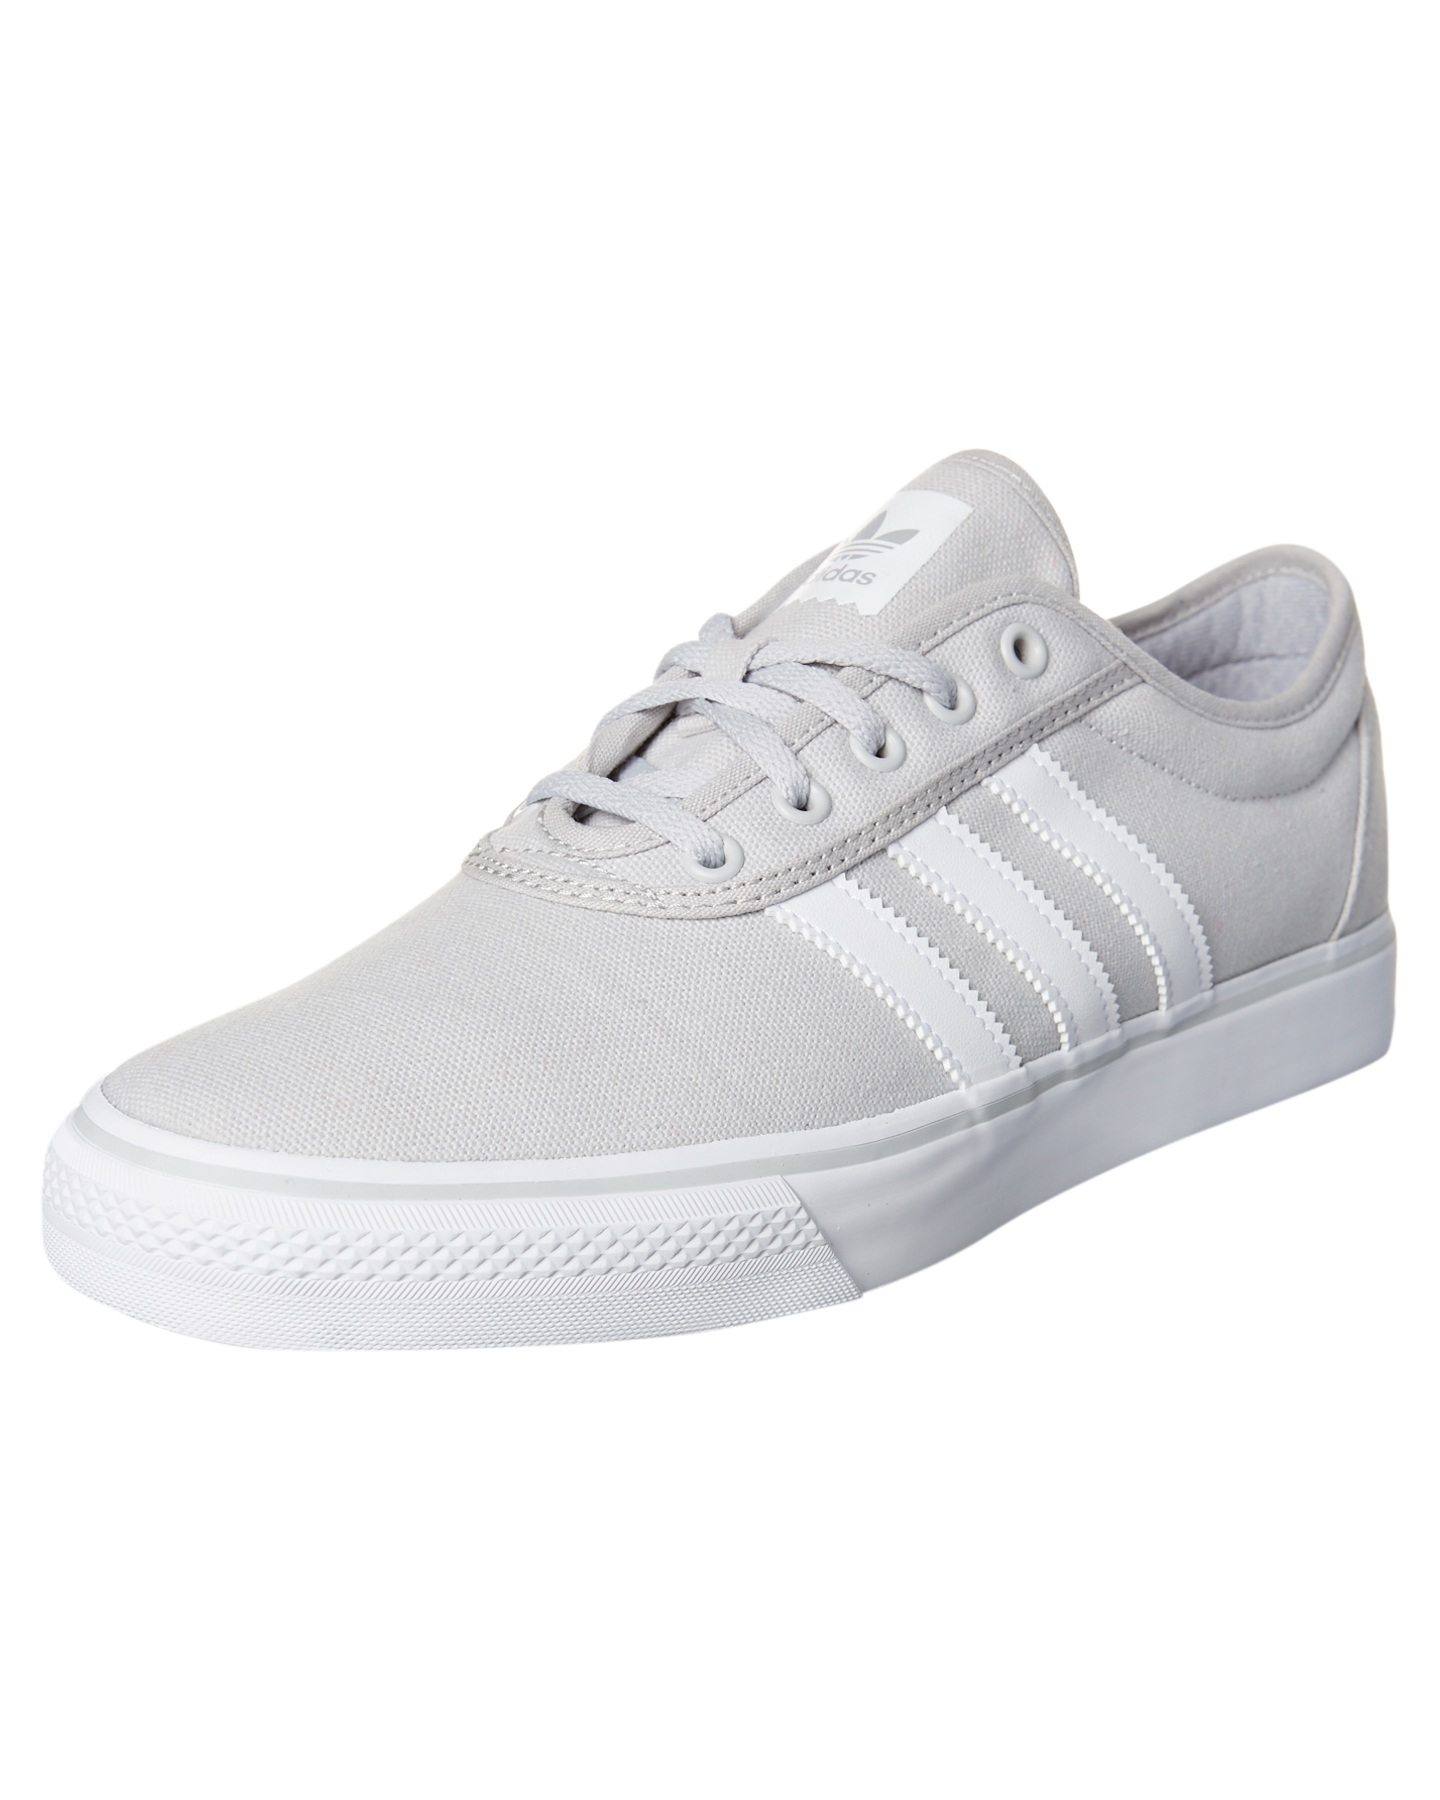 Adidas Originals Mens Adi Ease Shoe - Lgh Solid White | SurfStitch